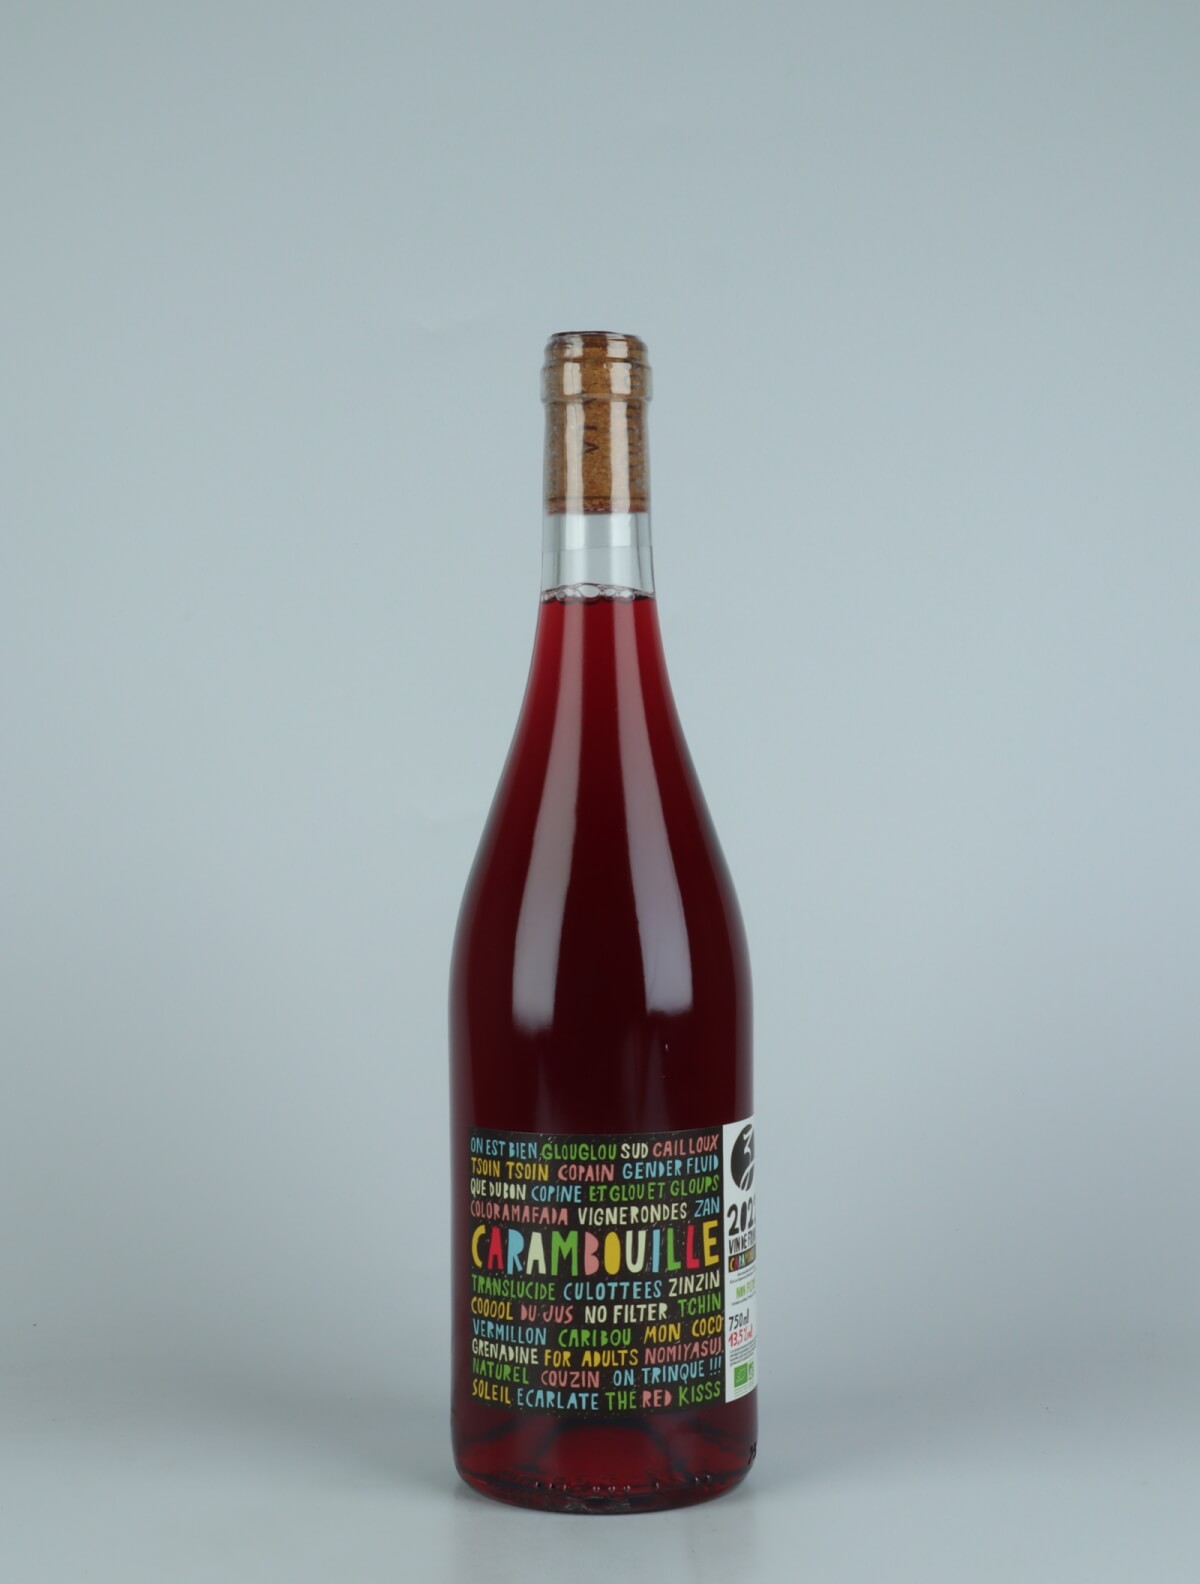 A bottle 2022 Carambouille Red wine from Les Vignerons d’Estézargues, Rhône in France